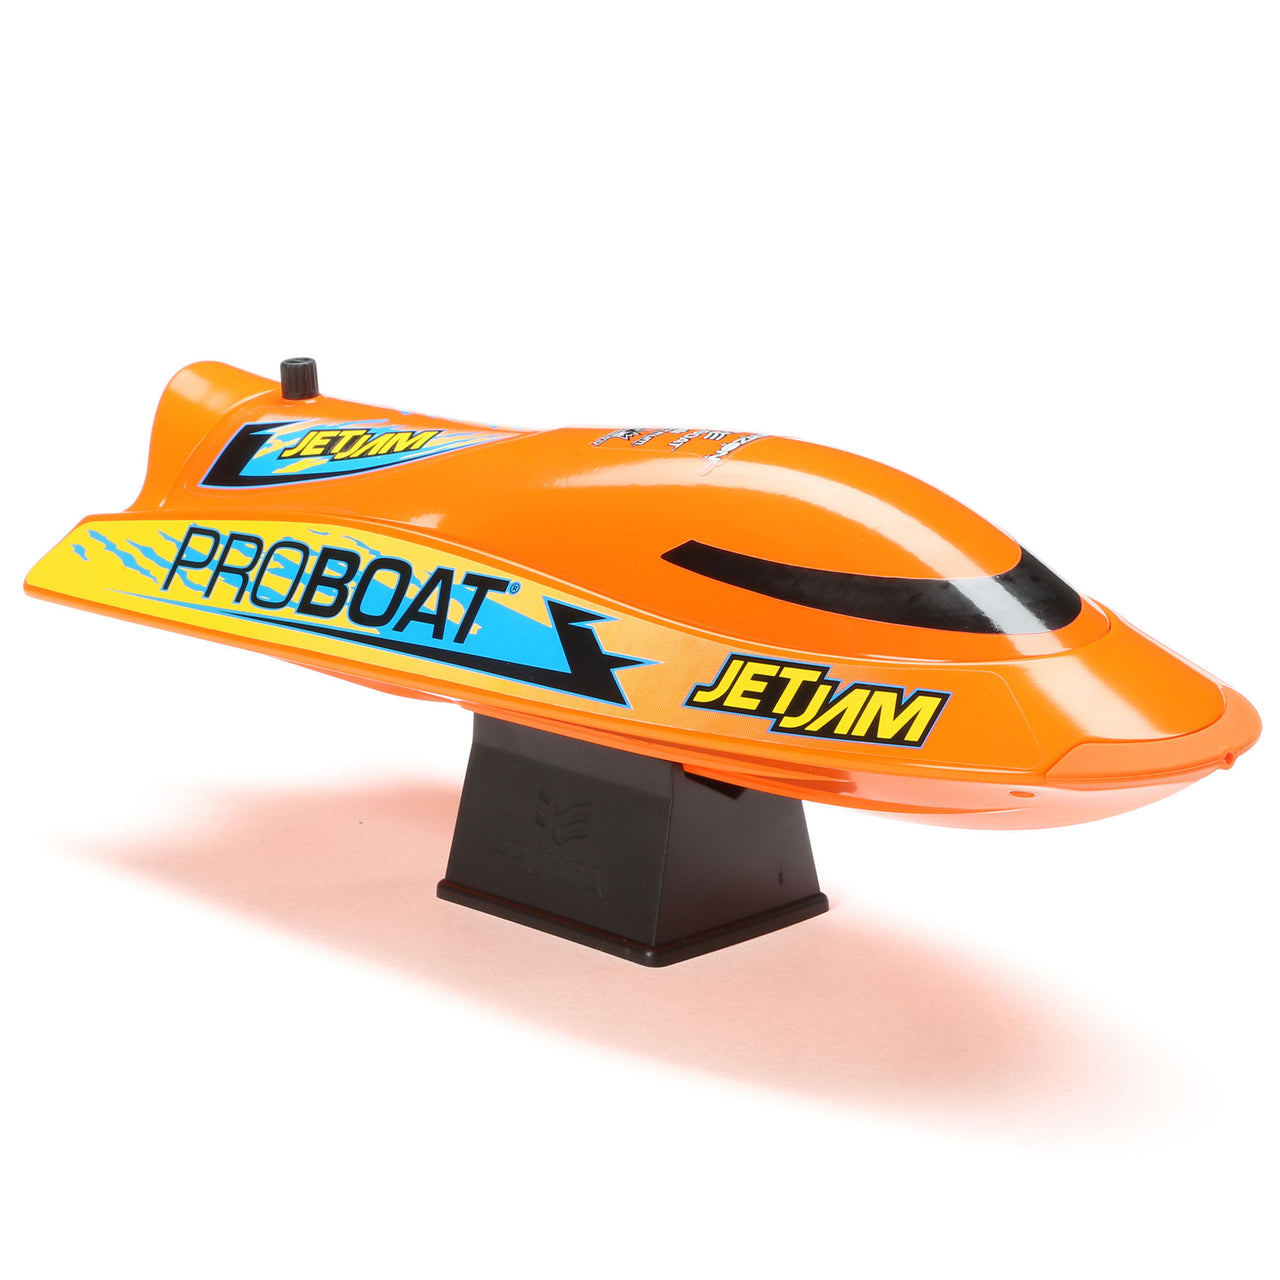 PRB08031V2T1 Jet Jam V2 12" Self-Righting Pool Racer Brushed RTR, orange